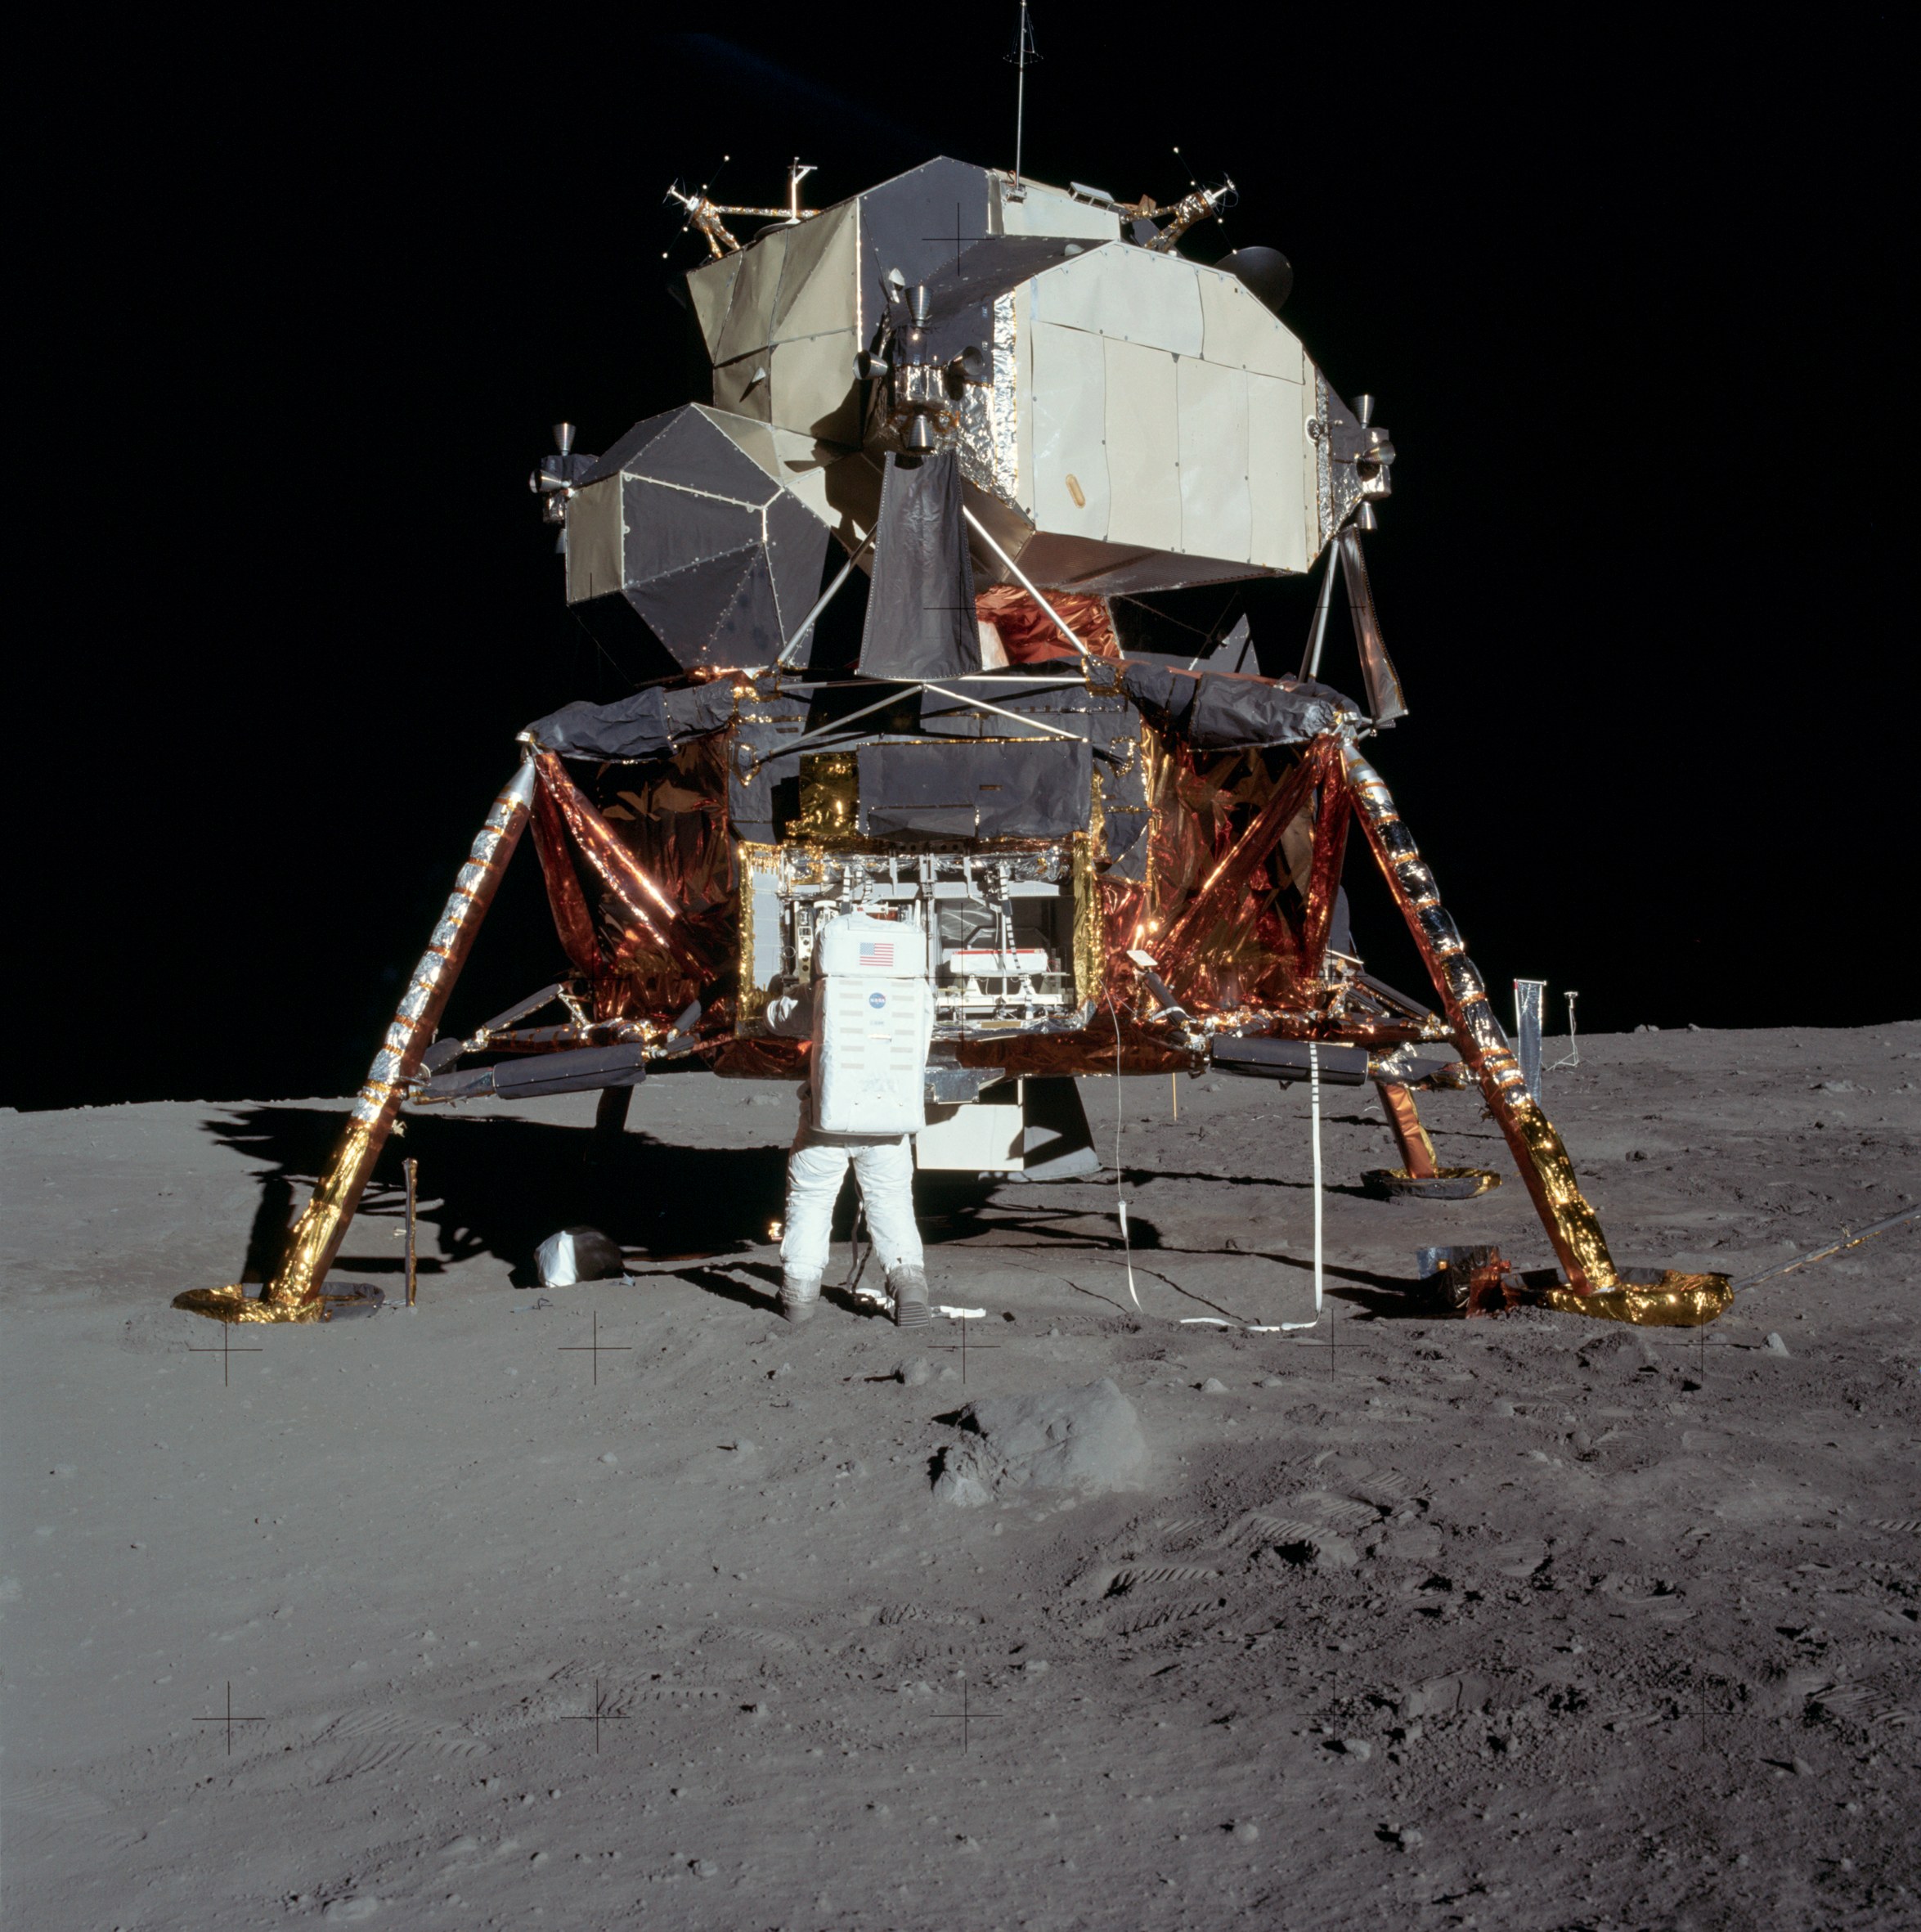 Landemodul "Eagle" der Apollo 11 Mission